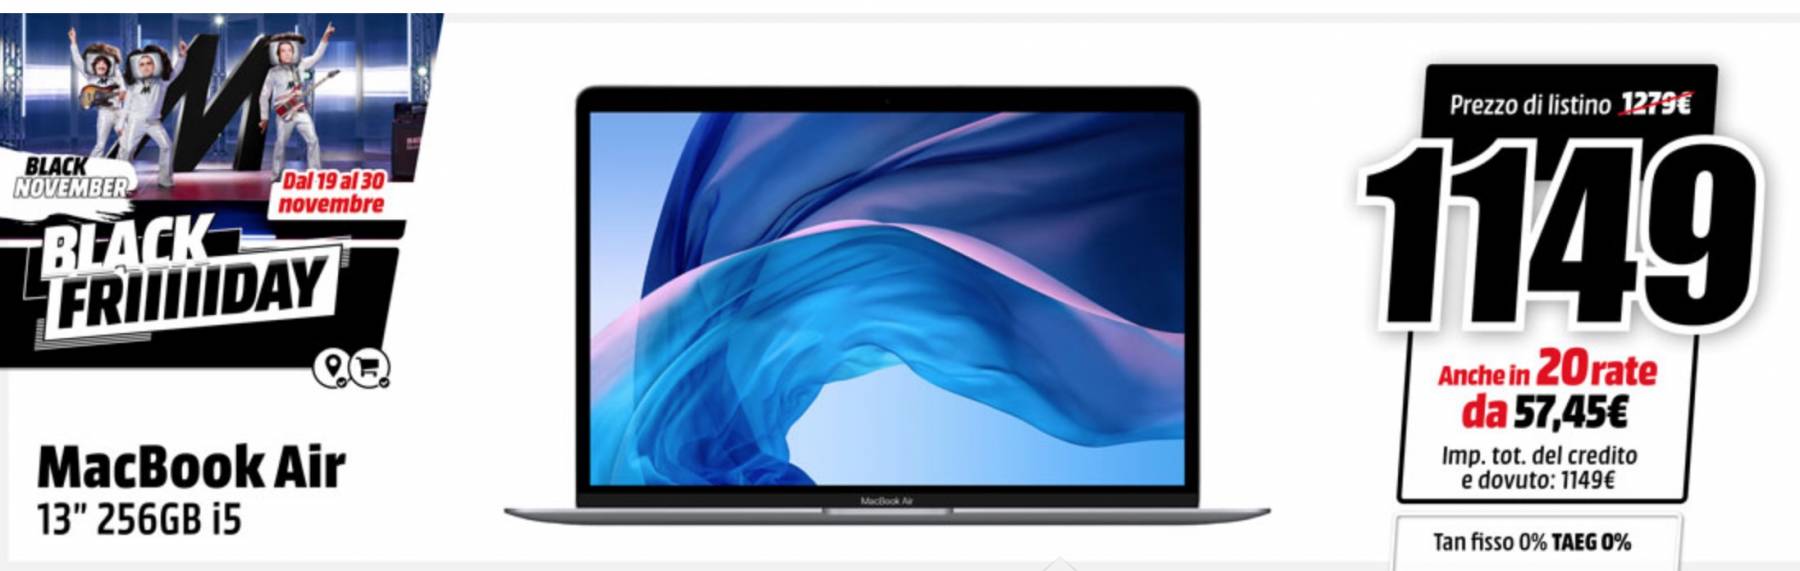 MacBook Air Intel offerta Black Friday MediaWorld 2020